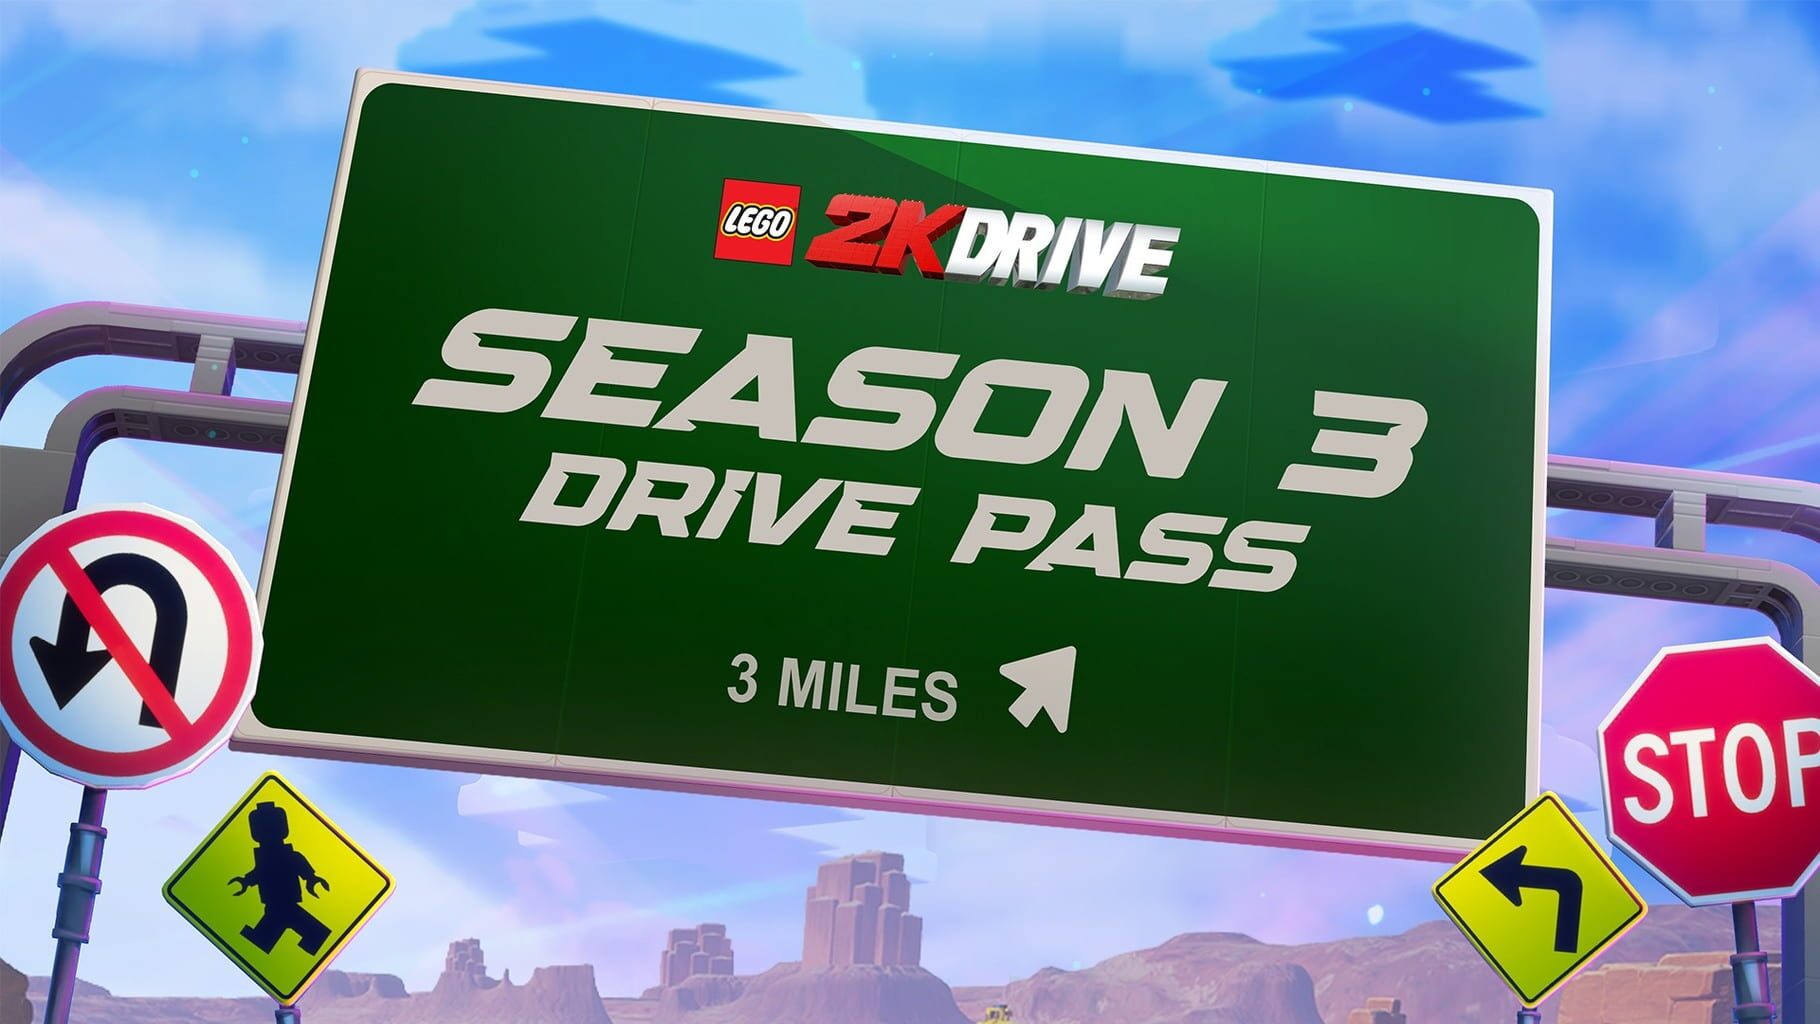 LEGO 2K Drive: Premium Drive Pass Season 3 Image